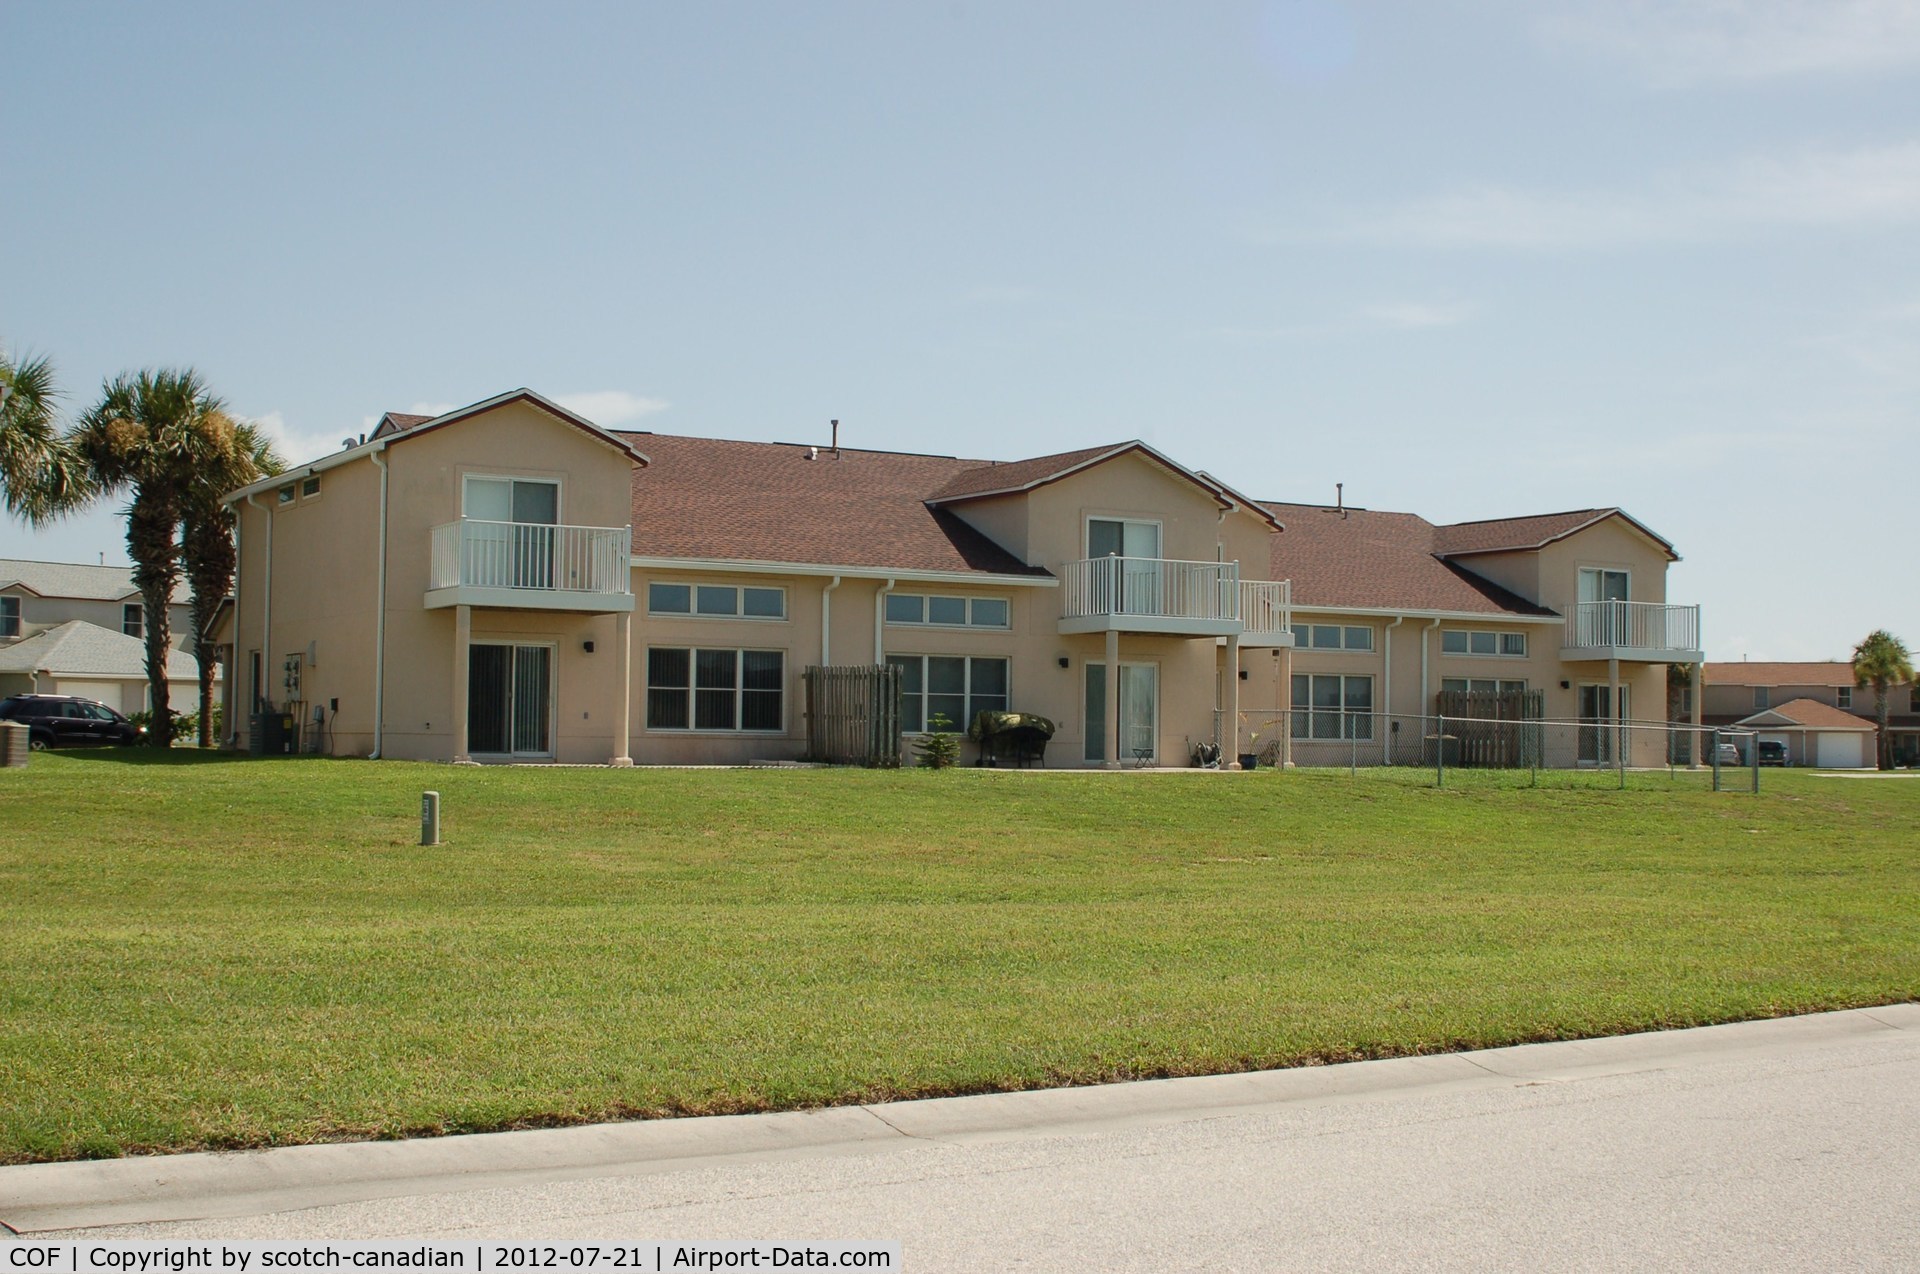 Patrick Afb Airport (COF) - Central Housing at Patrick Air Force Base, FL 